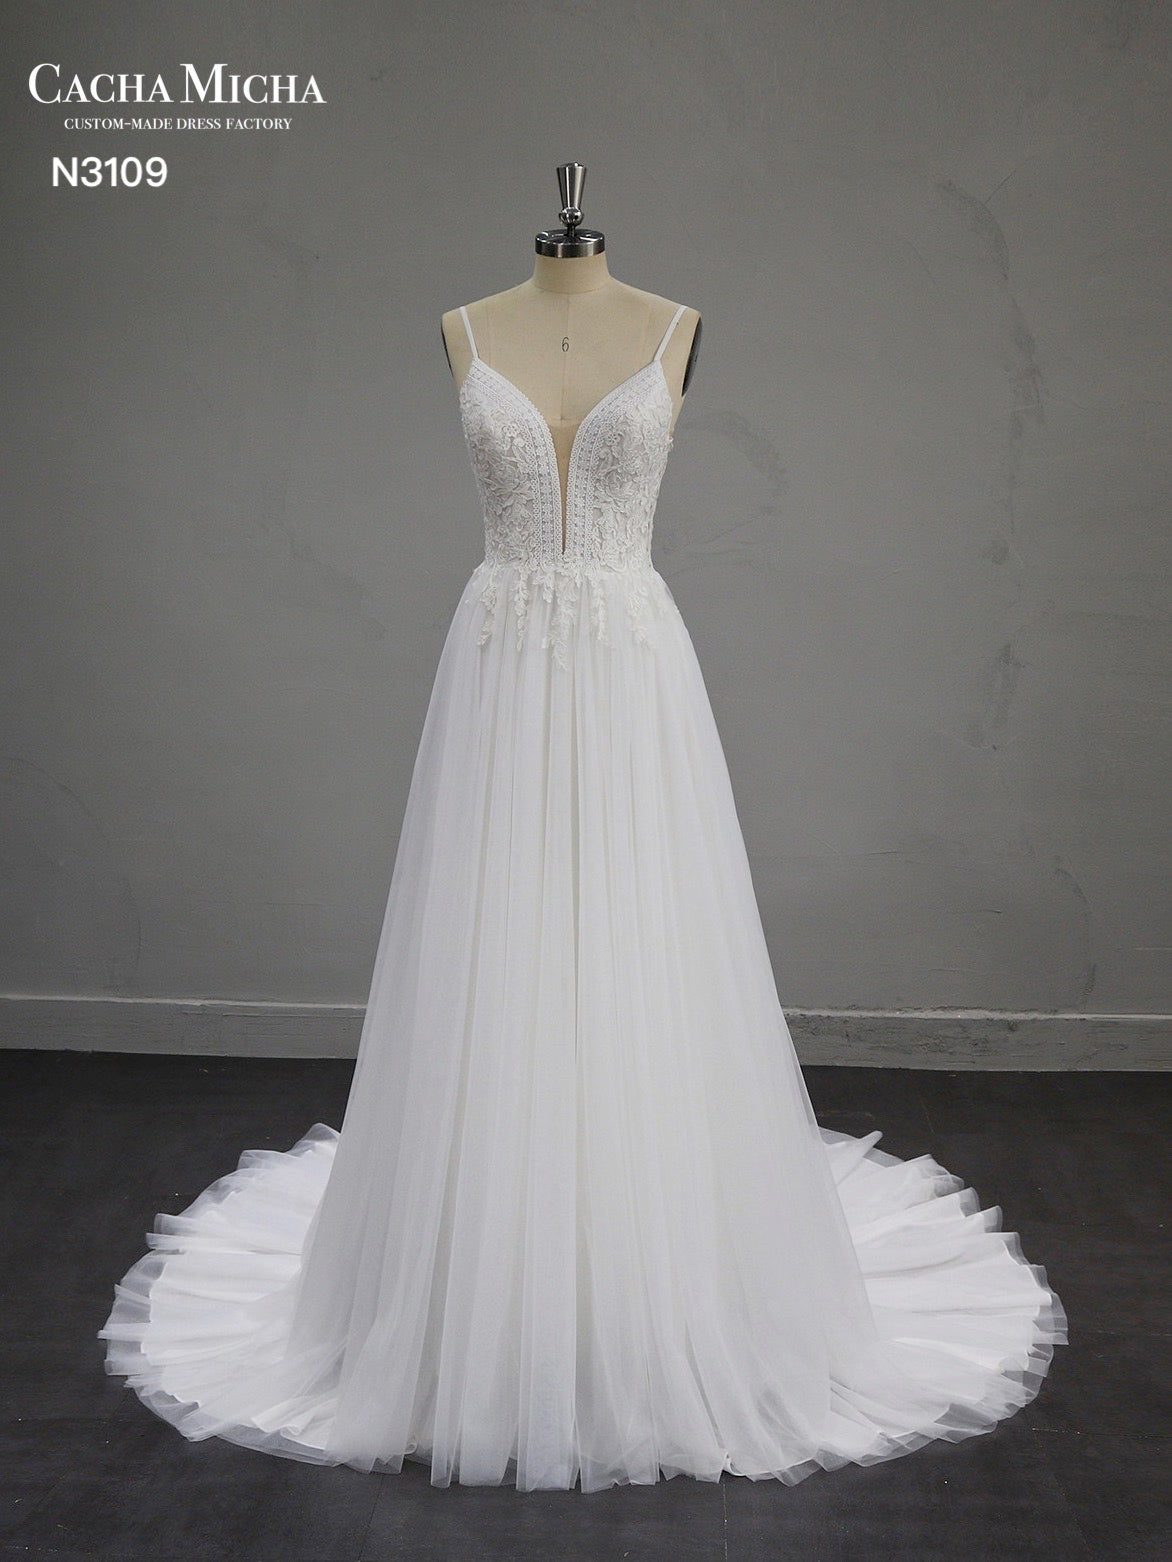 Beautiful Bohemia Lace A Line Wedding Dress N3109